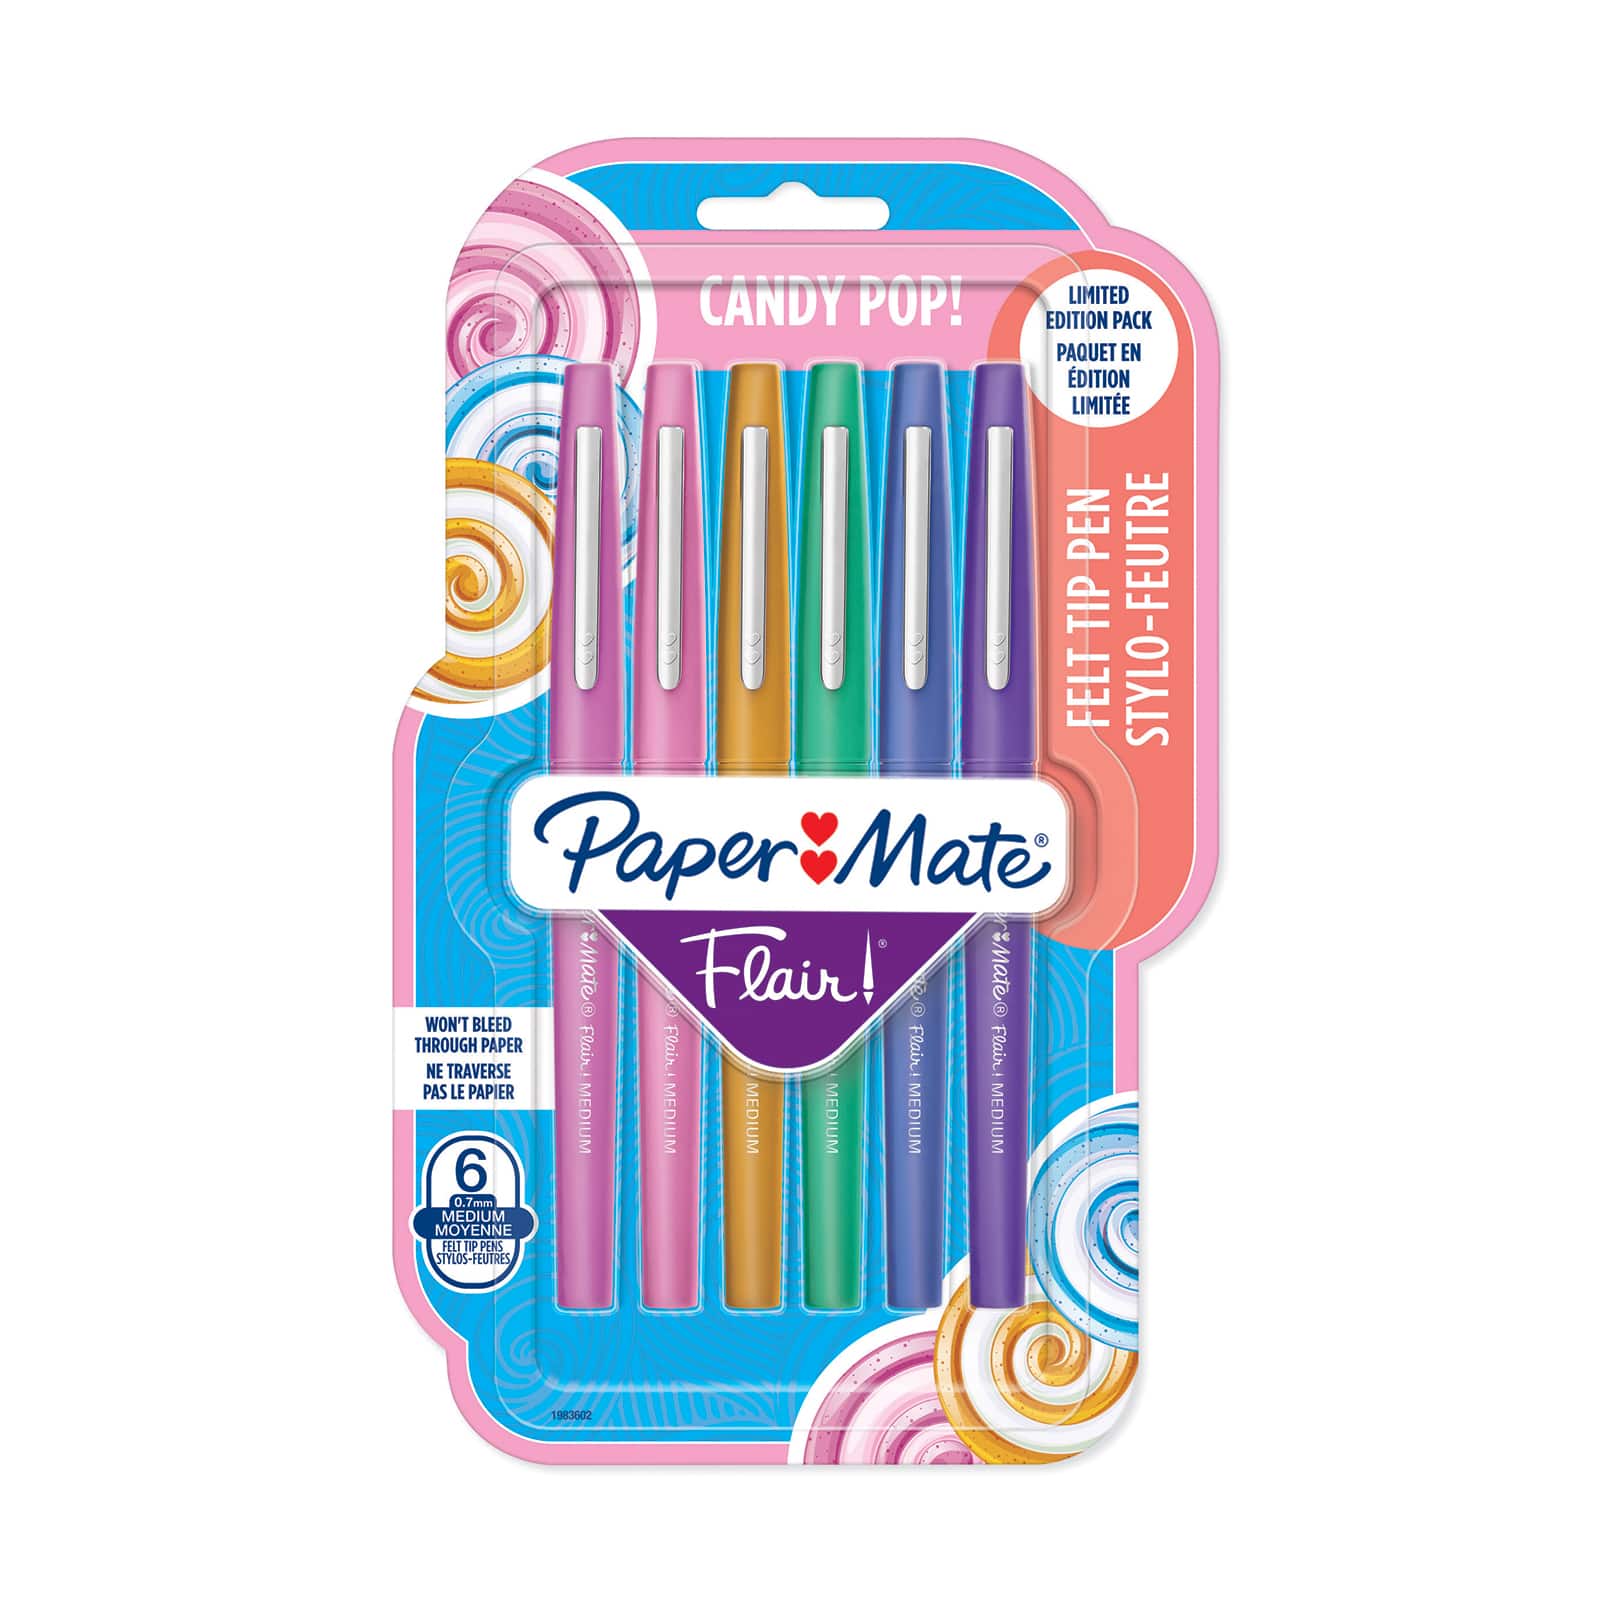 12 Packs: 6 ct. (72 total) Paper Mate&#xAE; Flair&#xAE; Felt Tip Candy Pop Pen Set